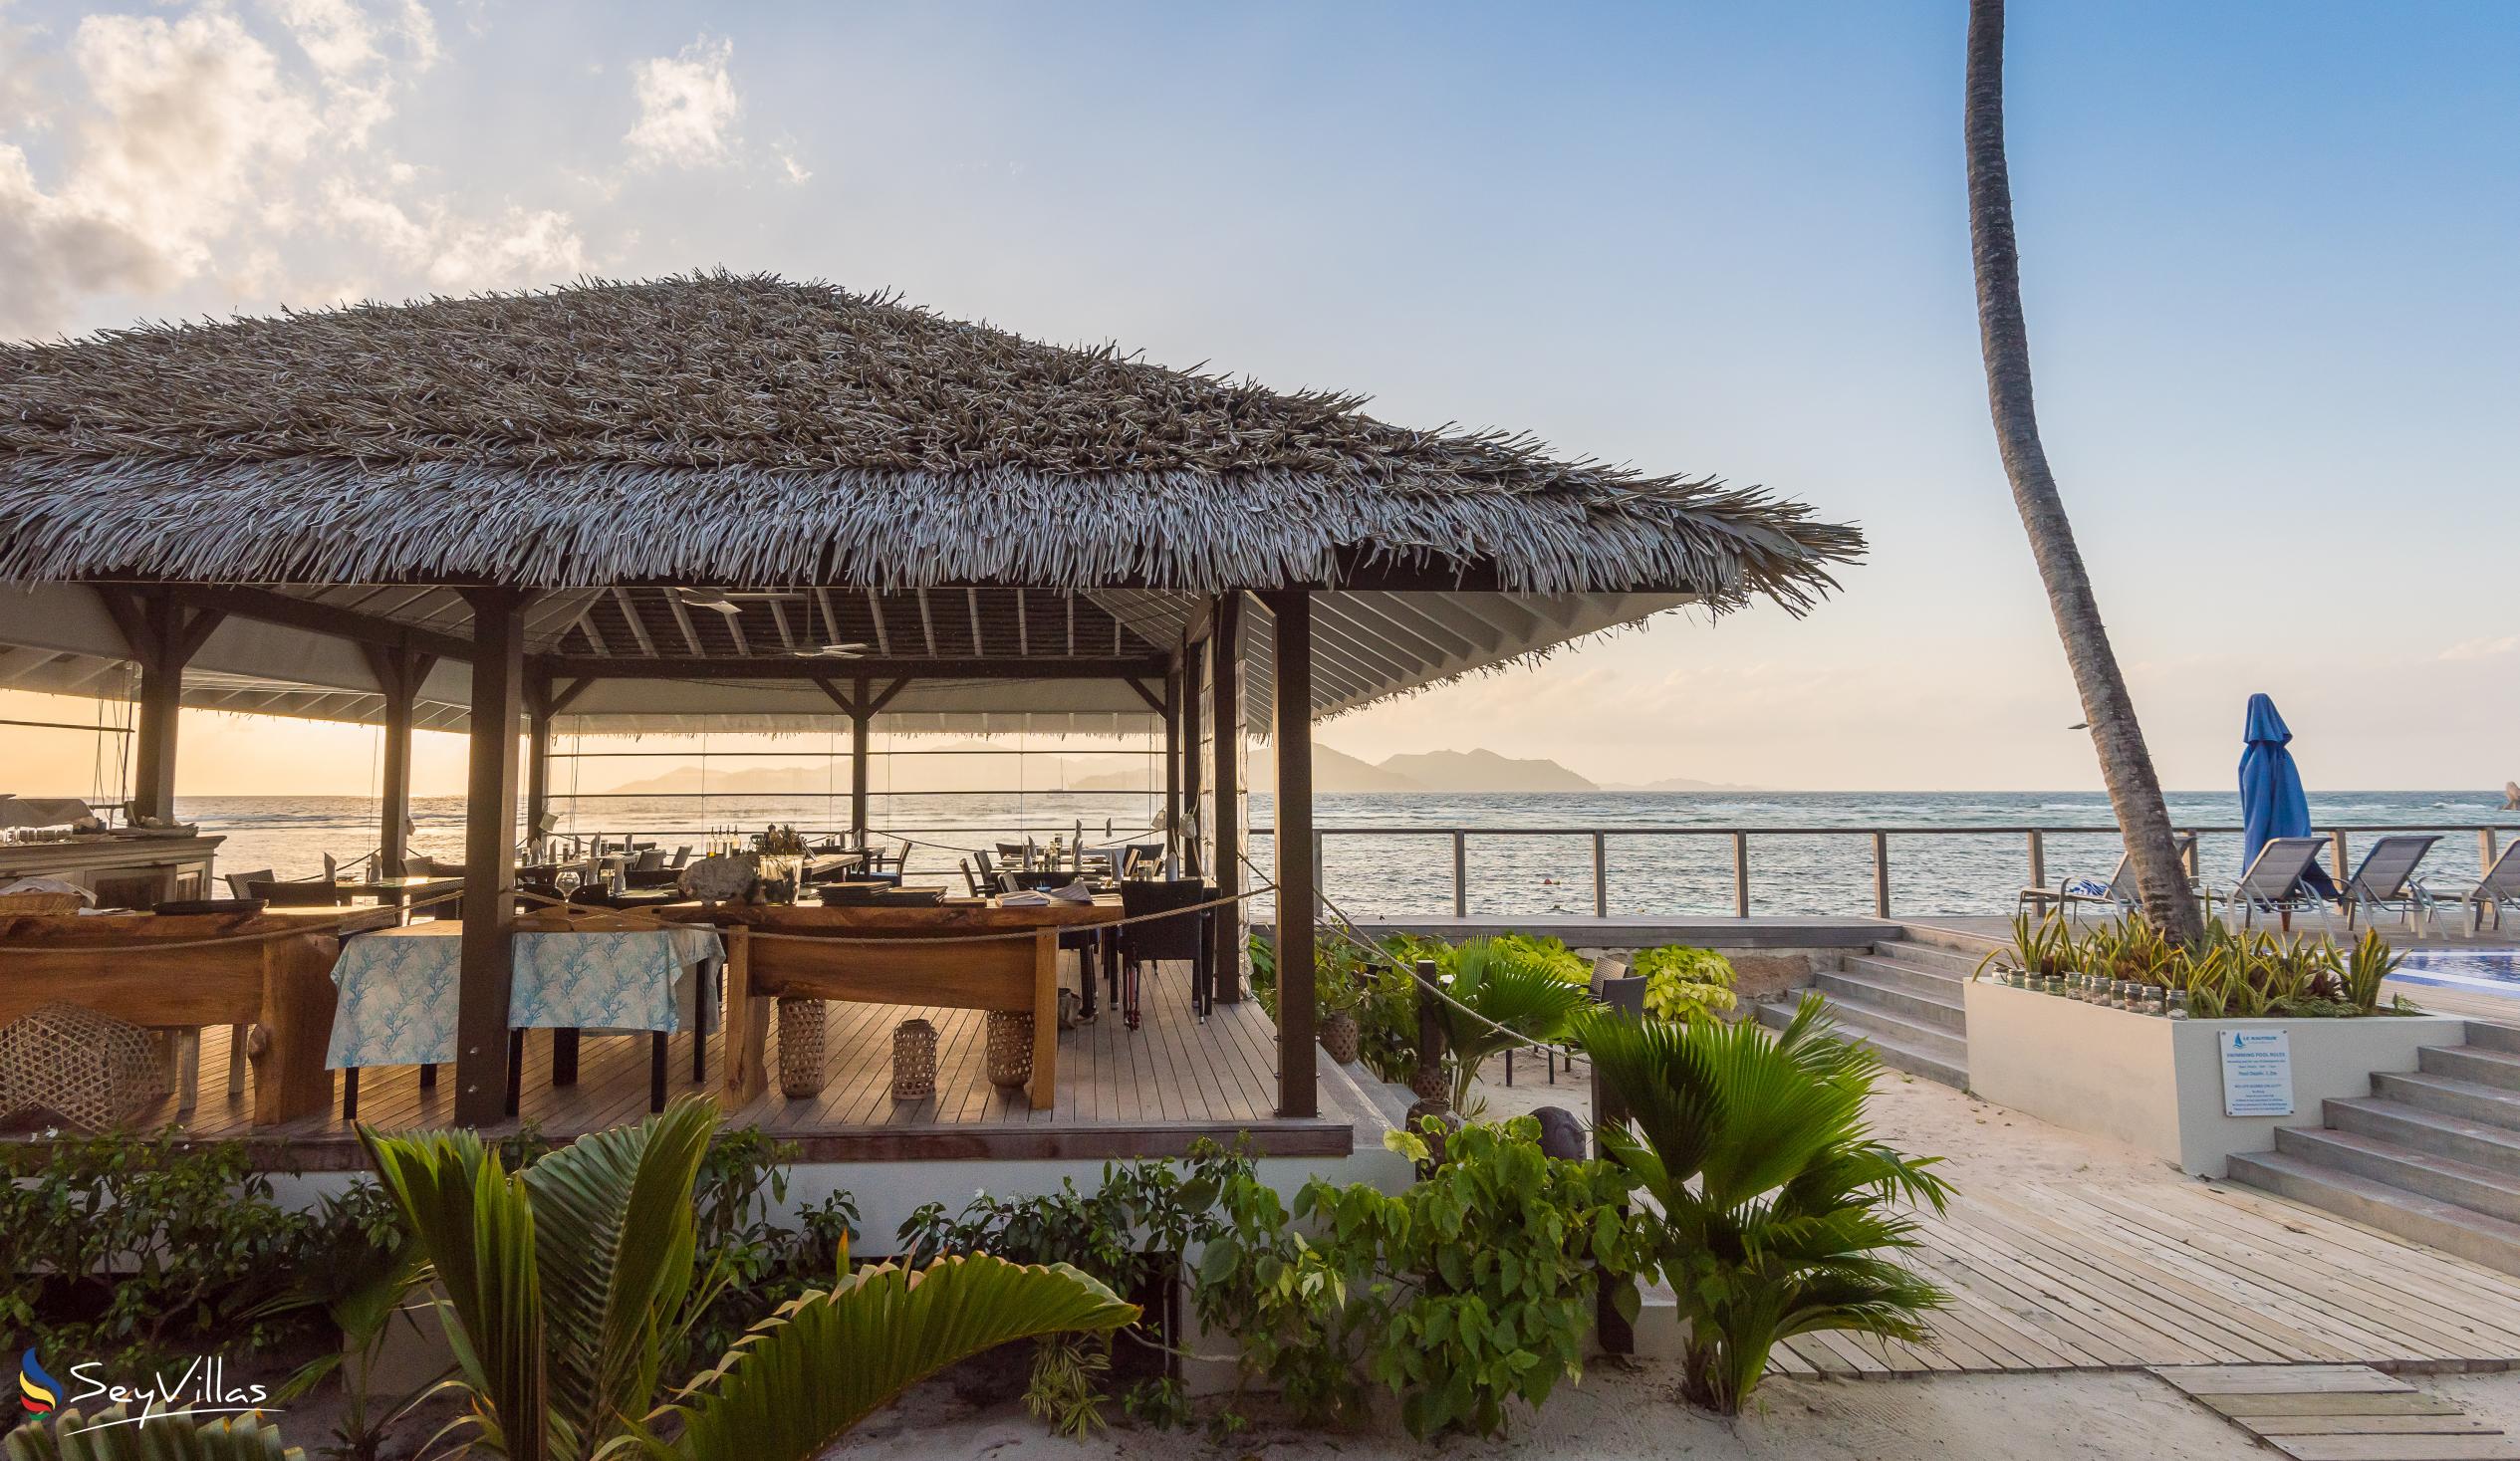 Foto 40: Le Nautique Luxury Waterfront Hotel - Interno - La Digue (Seychelles)